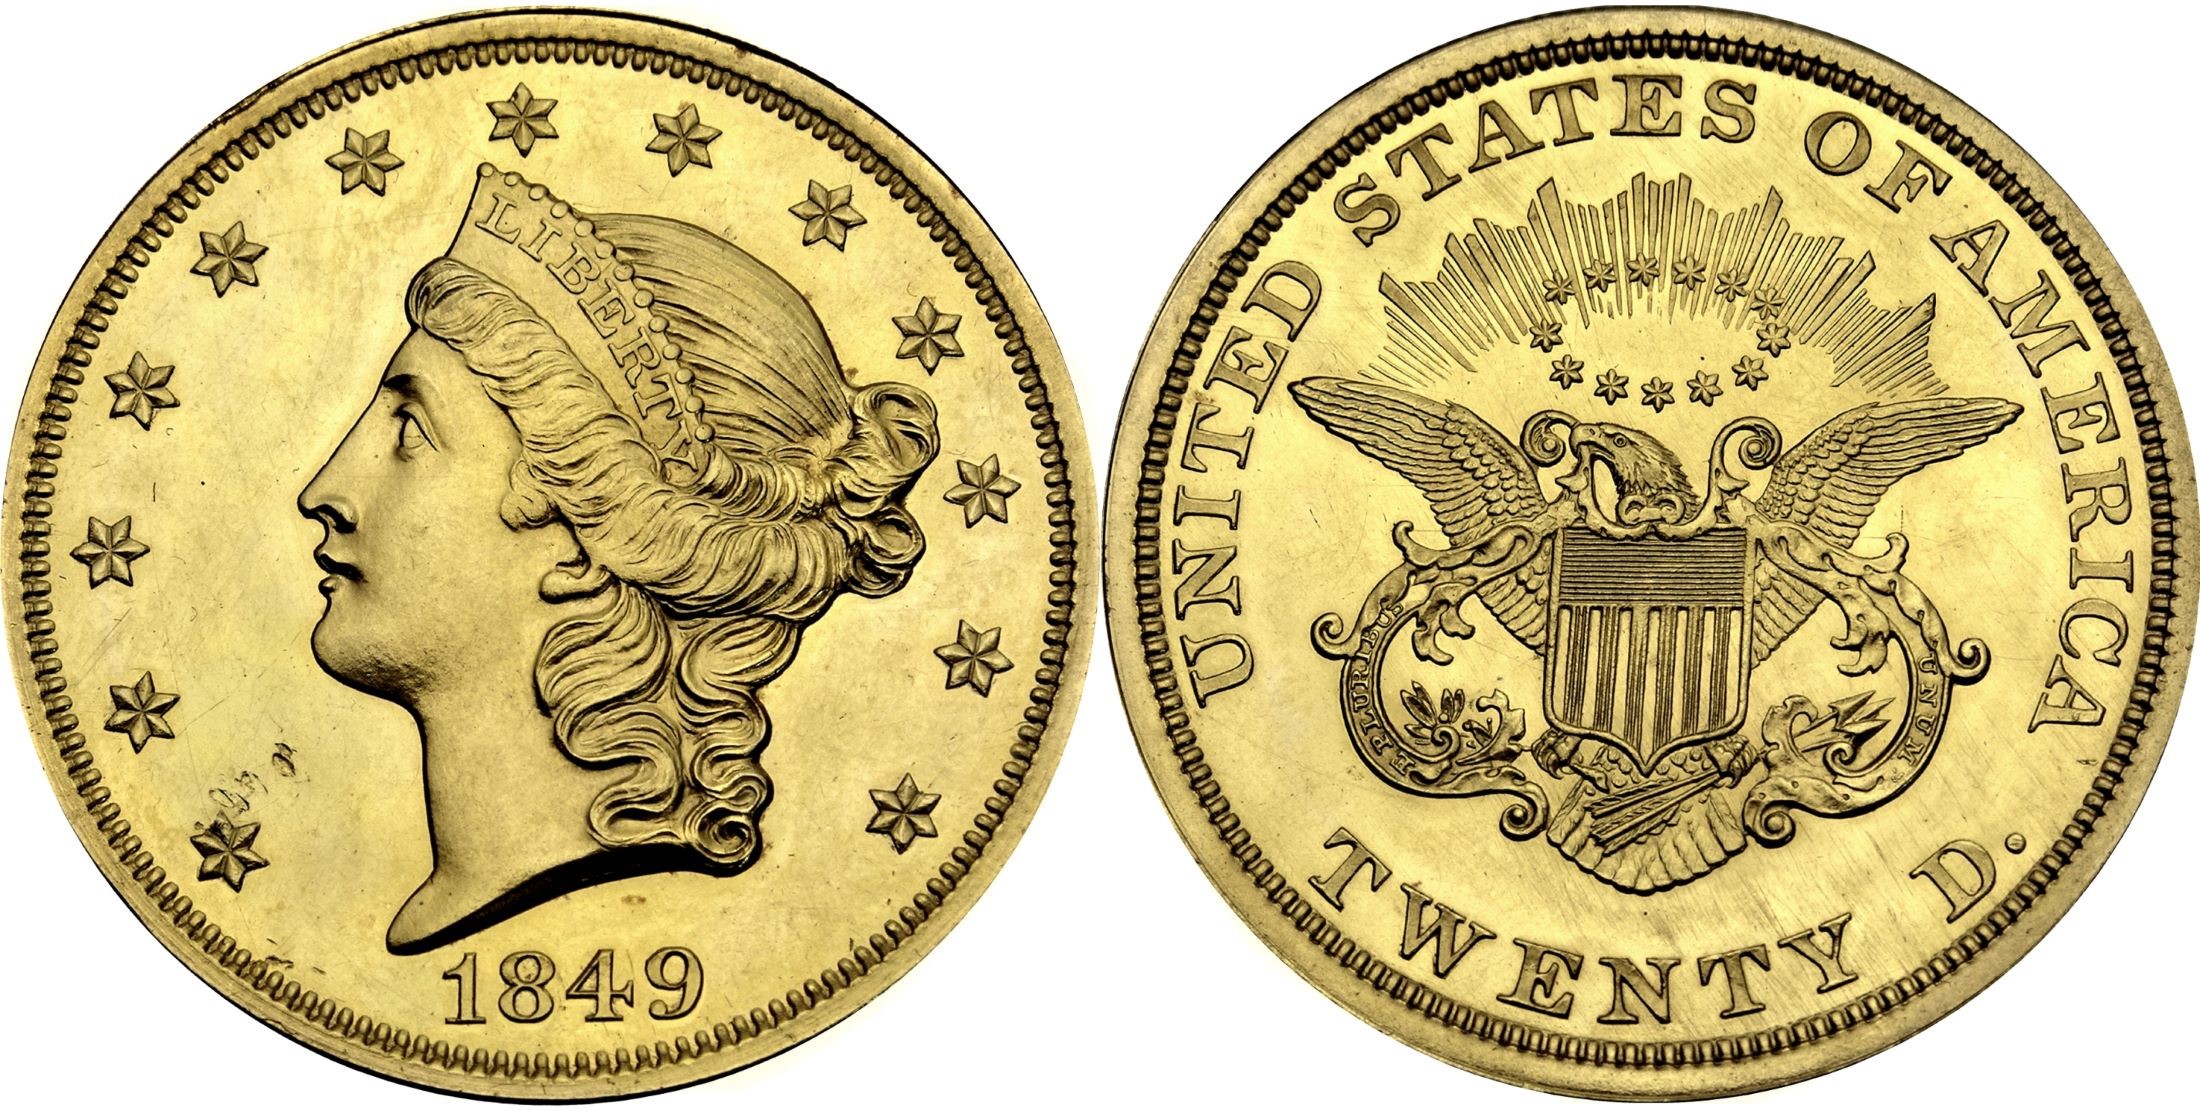 Rare Gold Coin From Golden Rush Era